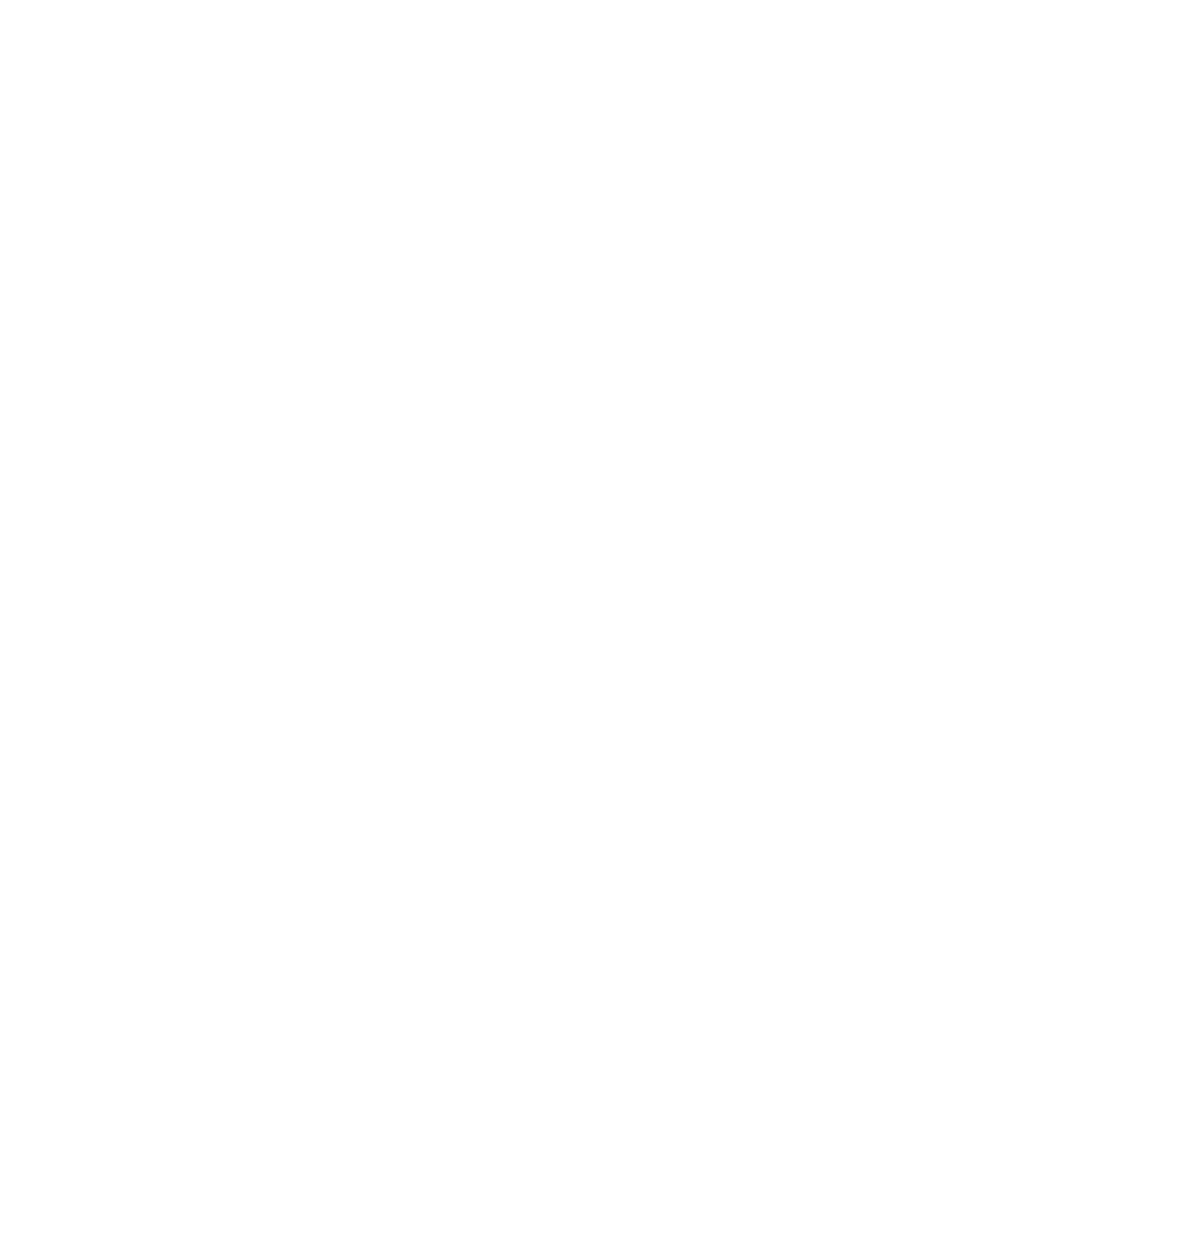 Development js laravel logo script icon - Download in SVG, PNG, ICO